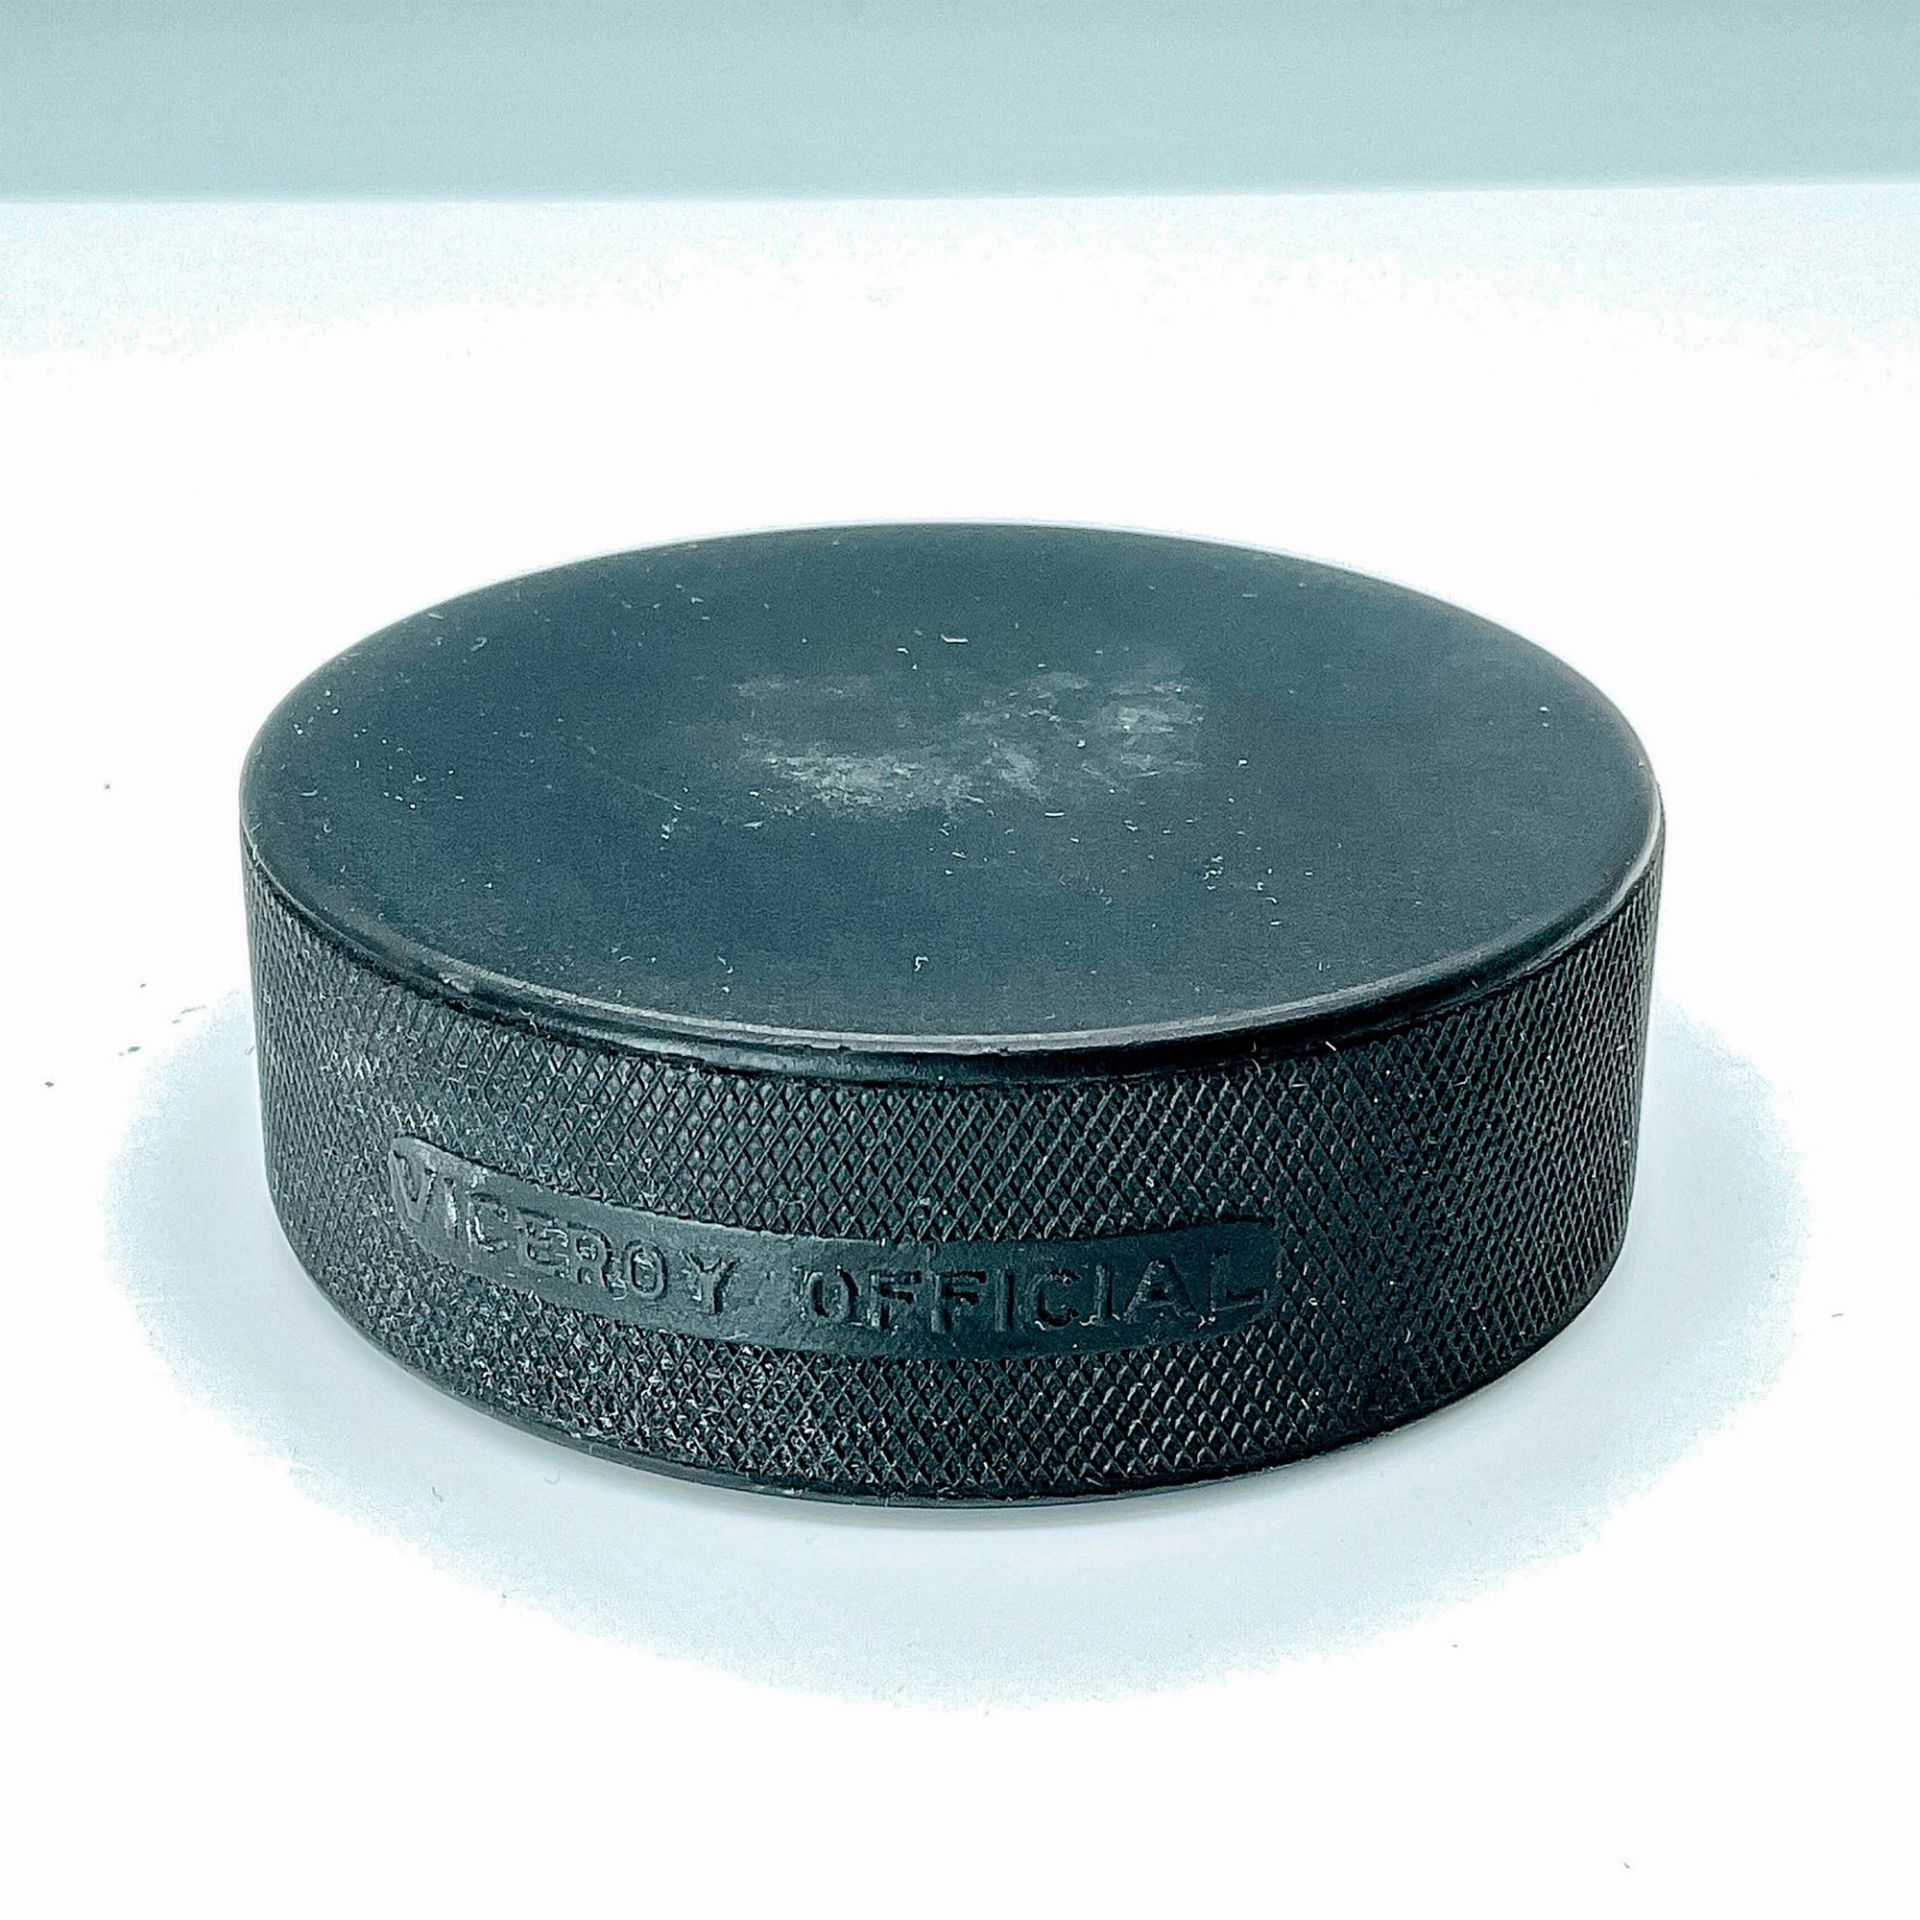 Sandis Ozolins No. 44 Autographed Hockey Puck - Image 2 of 2